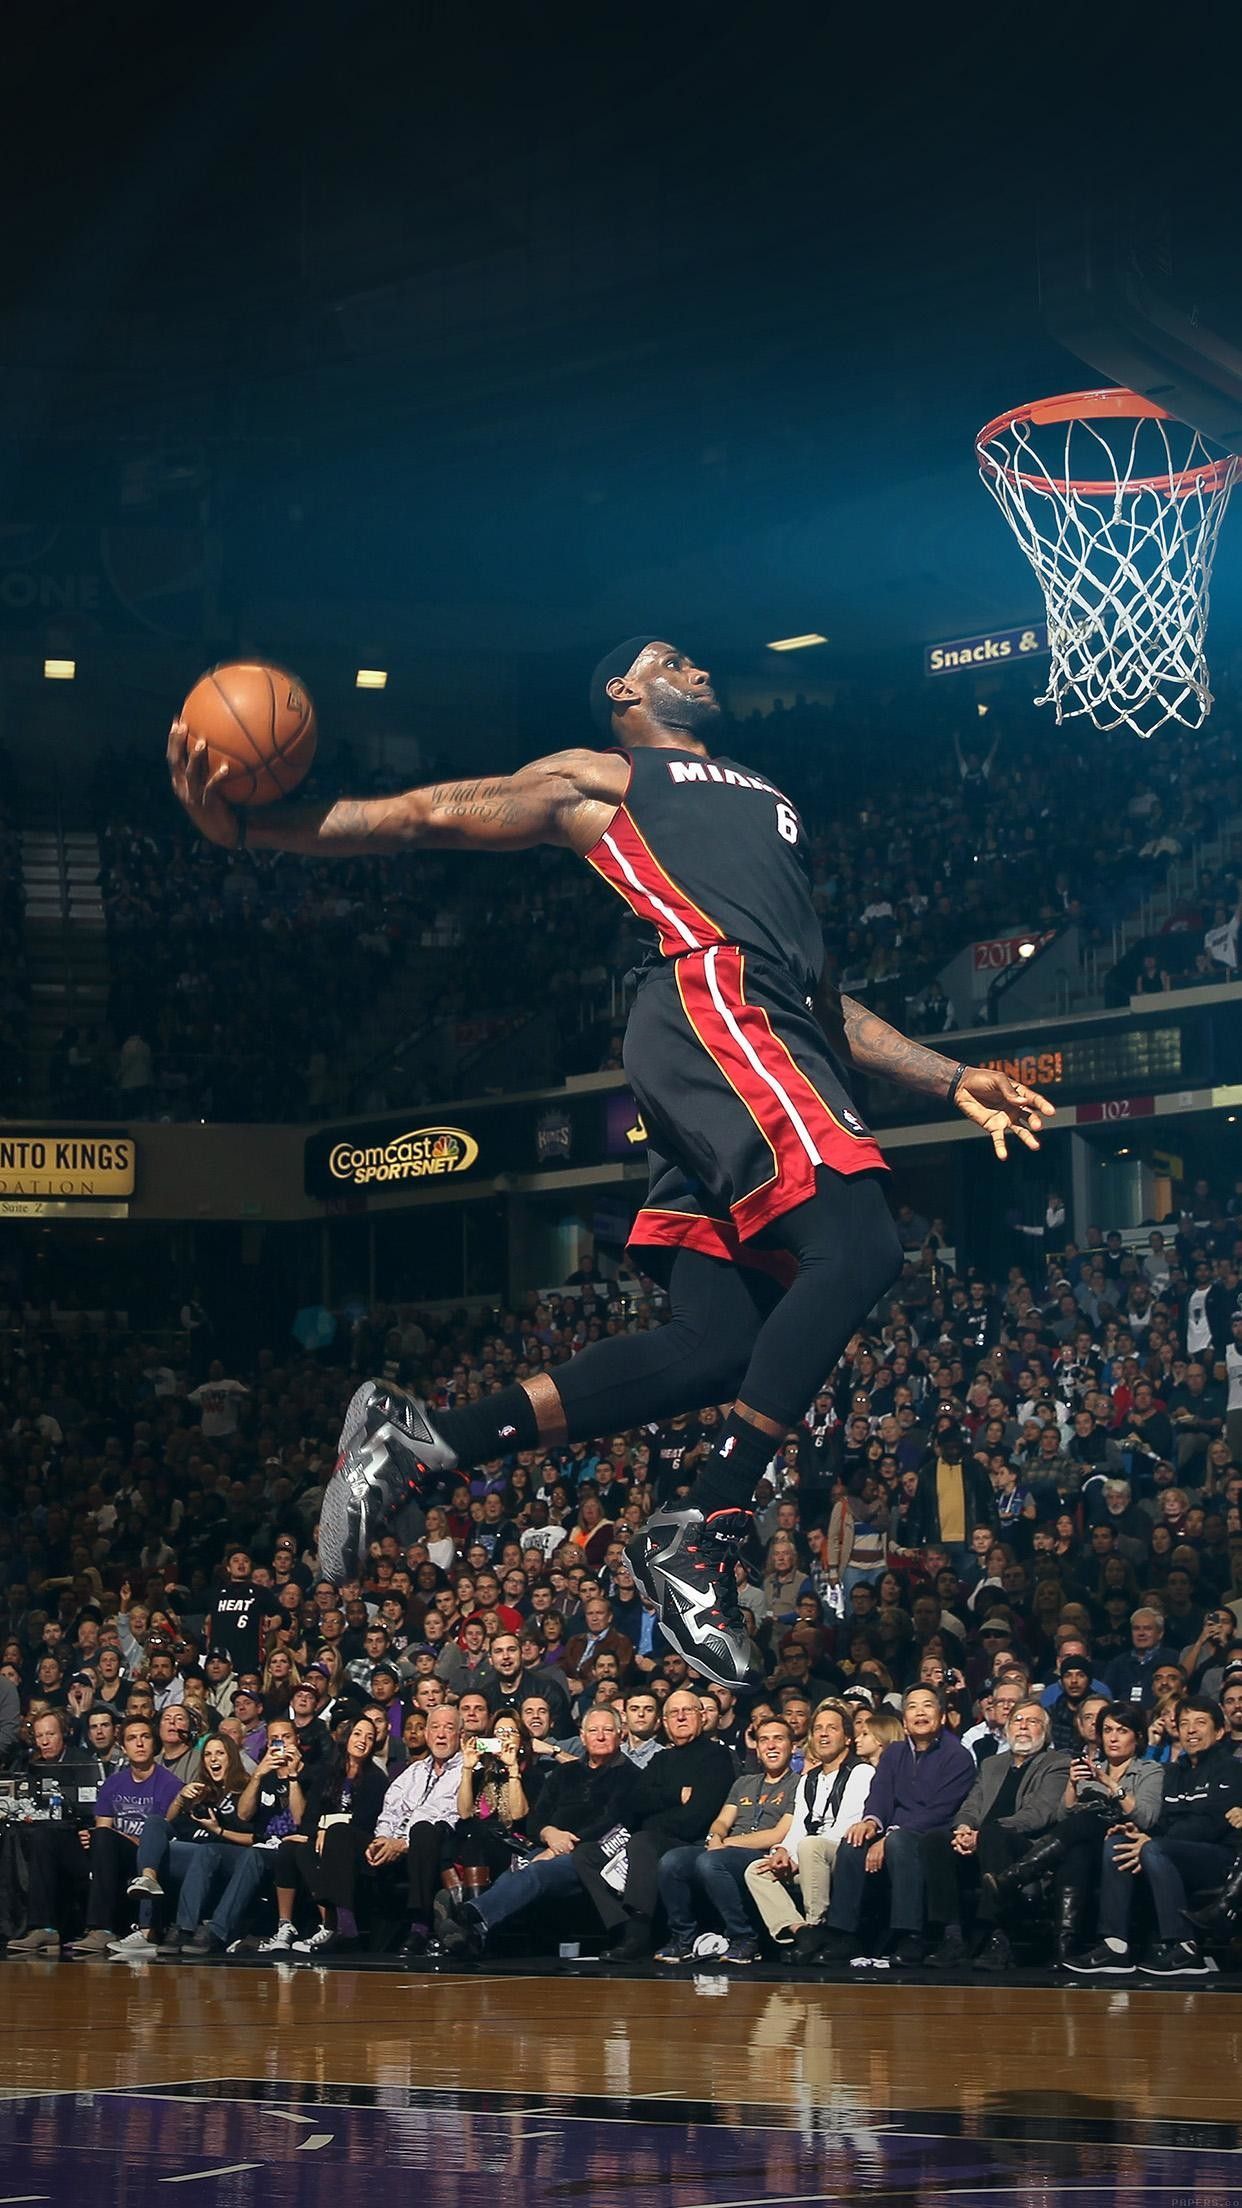 A man jumping up to grab the basketball - NBA